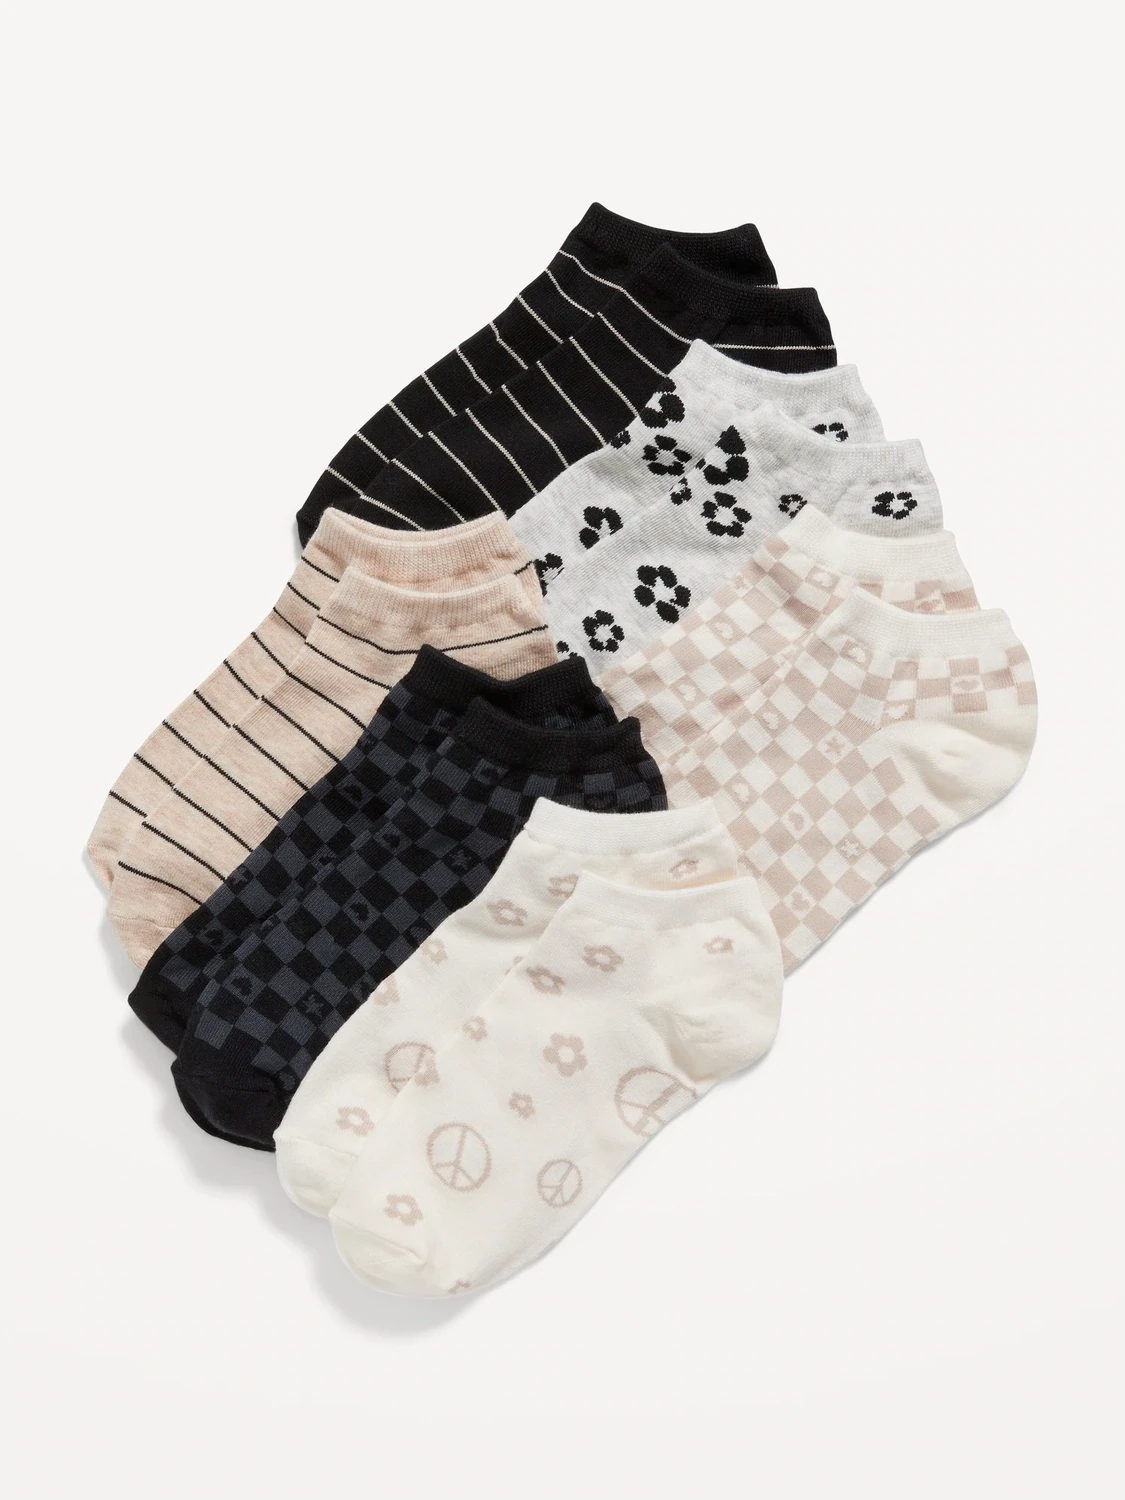 Old Navy Patterned Ankle Socks 6-Pack for Girls